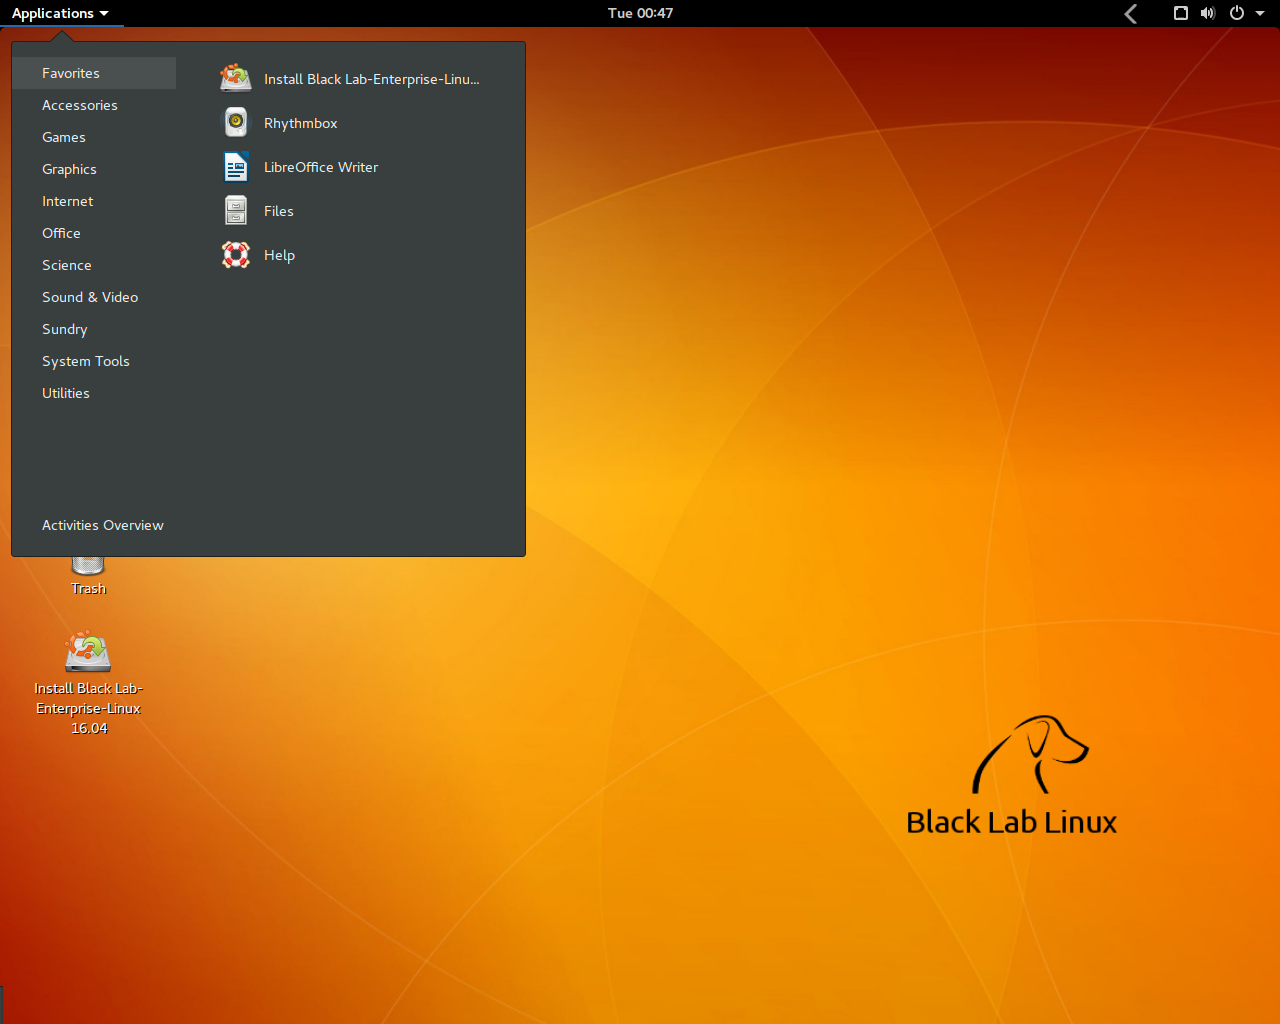 Gateway linux. ОС линукс. ОС семейства Linux. Операционка линукс. Linux Операционная система.